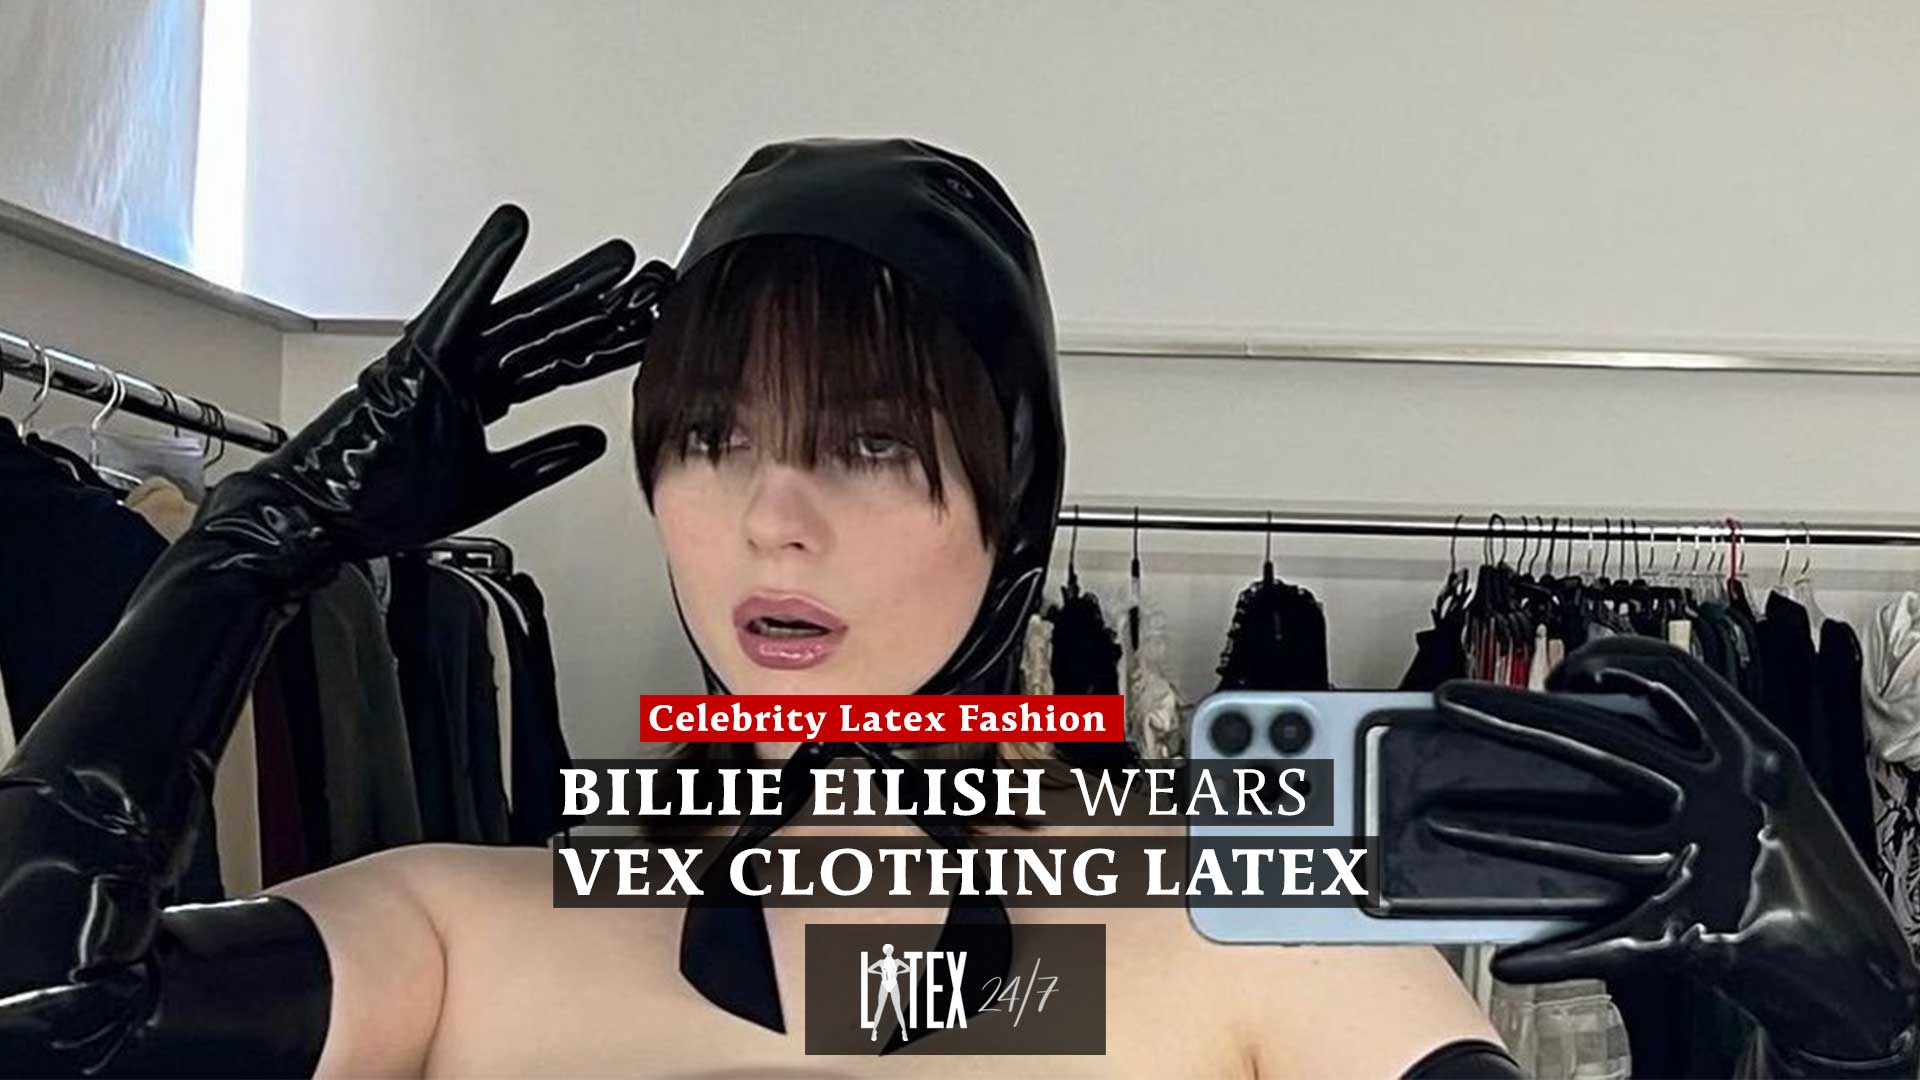 Celeb Fave Vex Latex worn by Singer Billie Eilish - Latex24/7